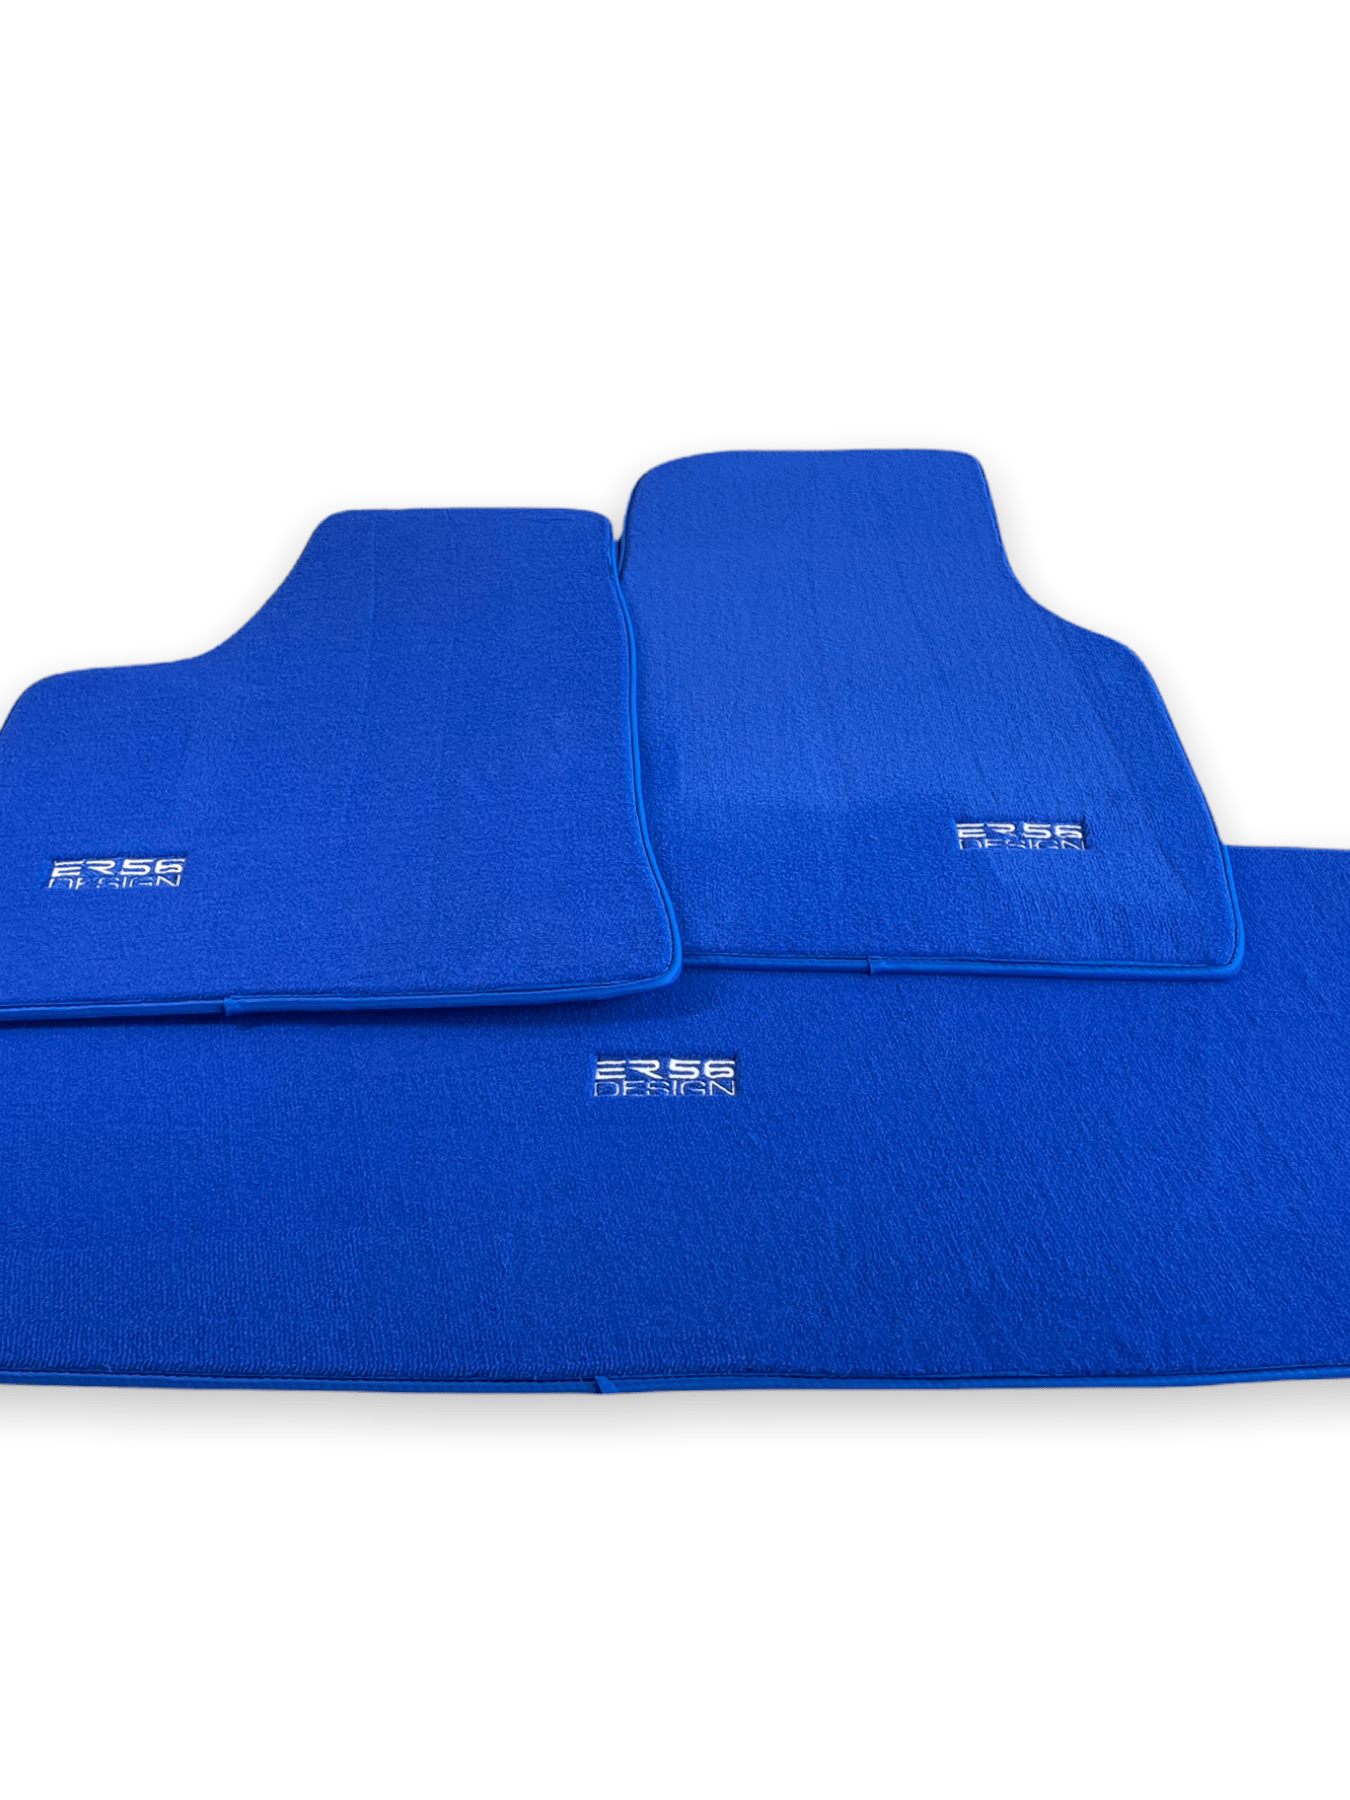 Floor Mats For Tesla Model X (6 Seats) Blue Tailored Carpets ER56 Design - AutoWin